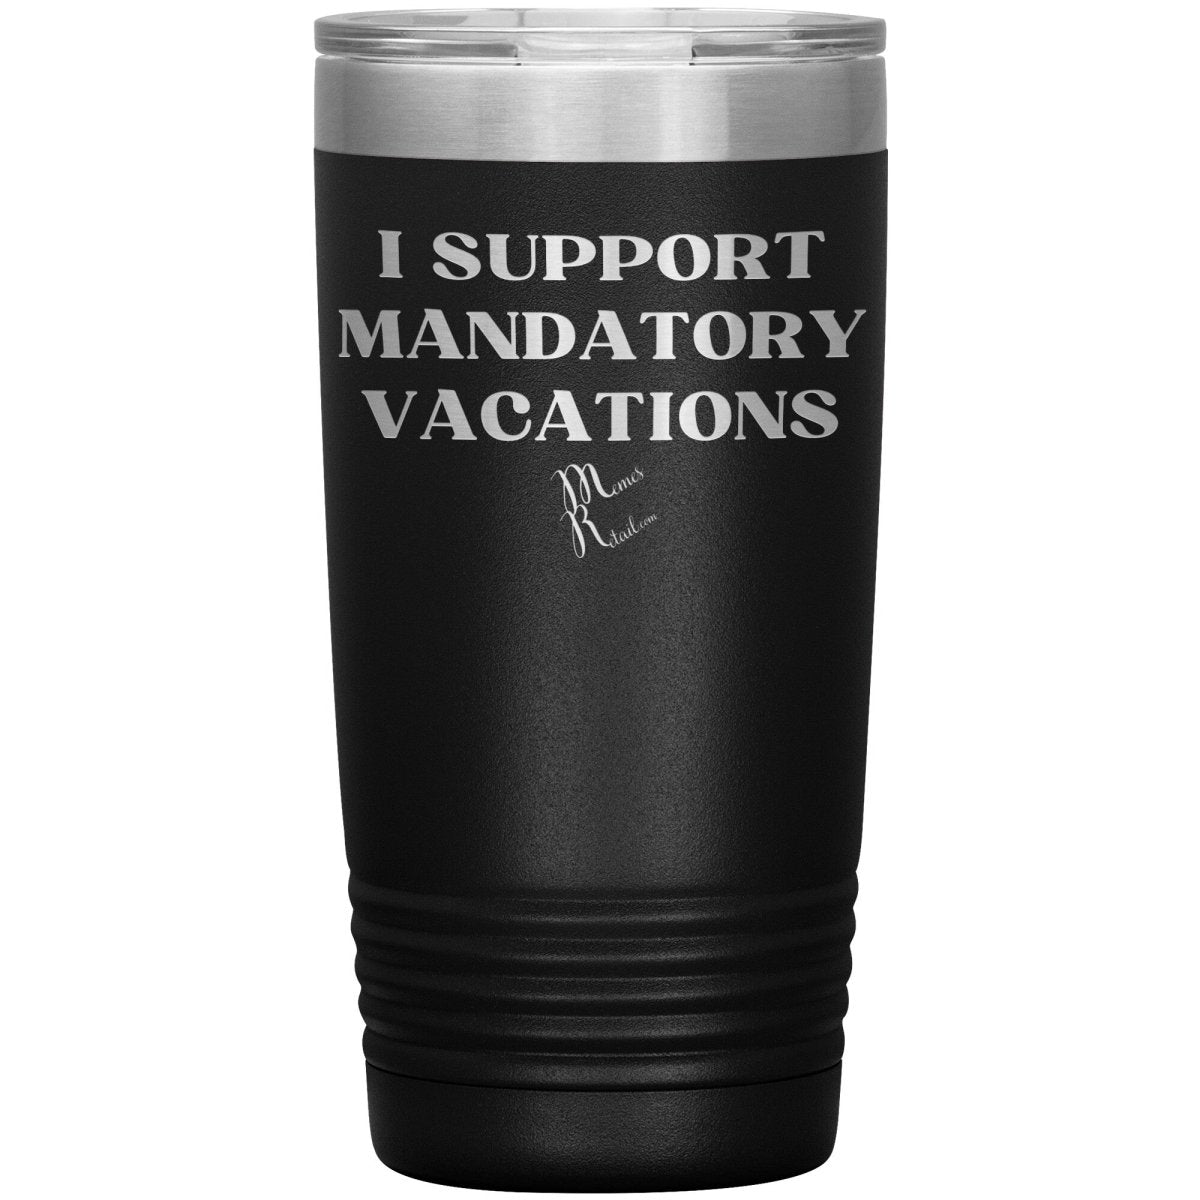 I support mandatory vacations Tumblers, 20oz Insulated Tumbler / Black - MemesRetail.com